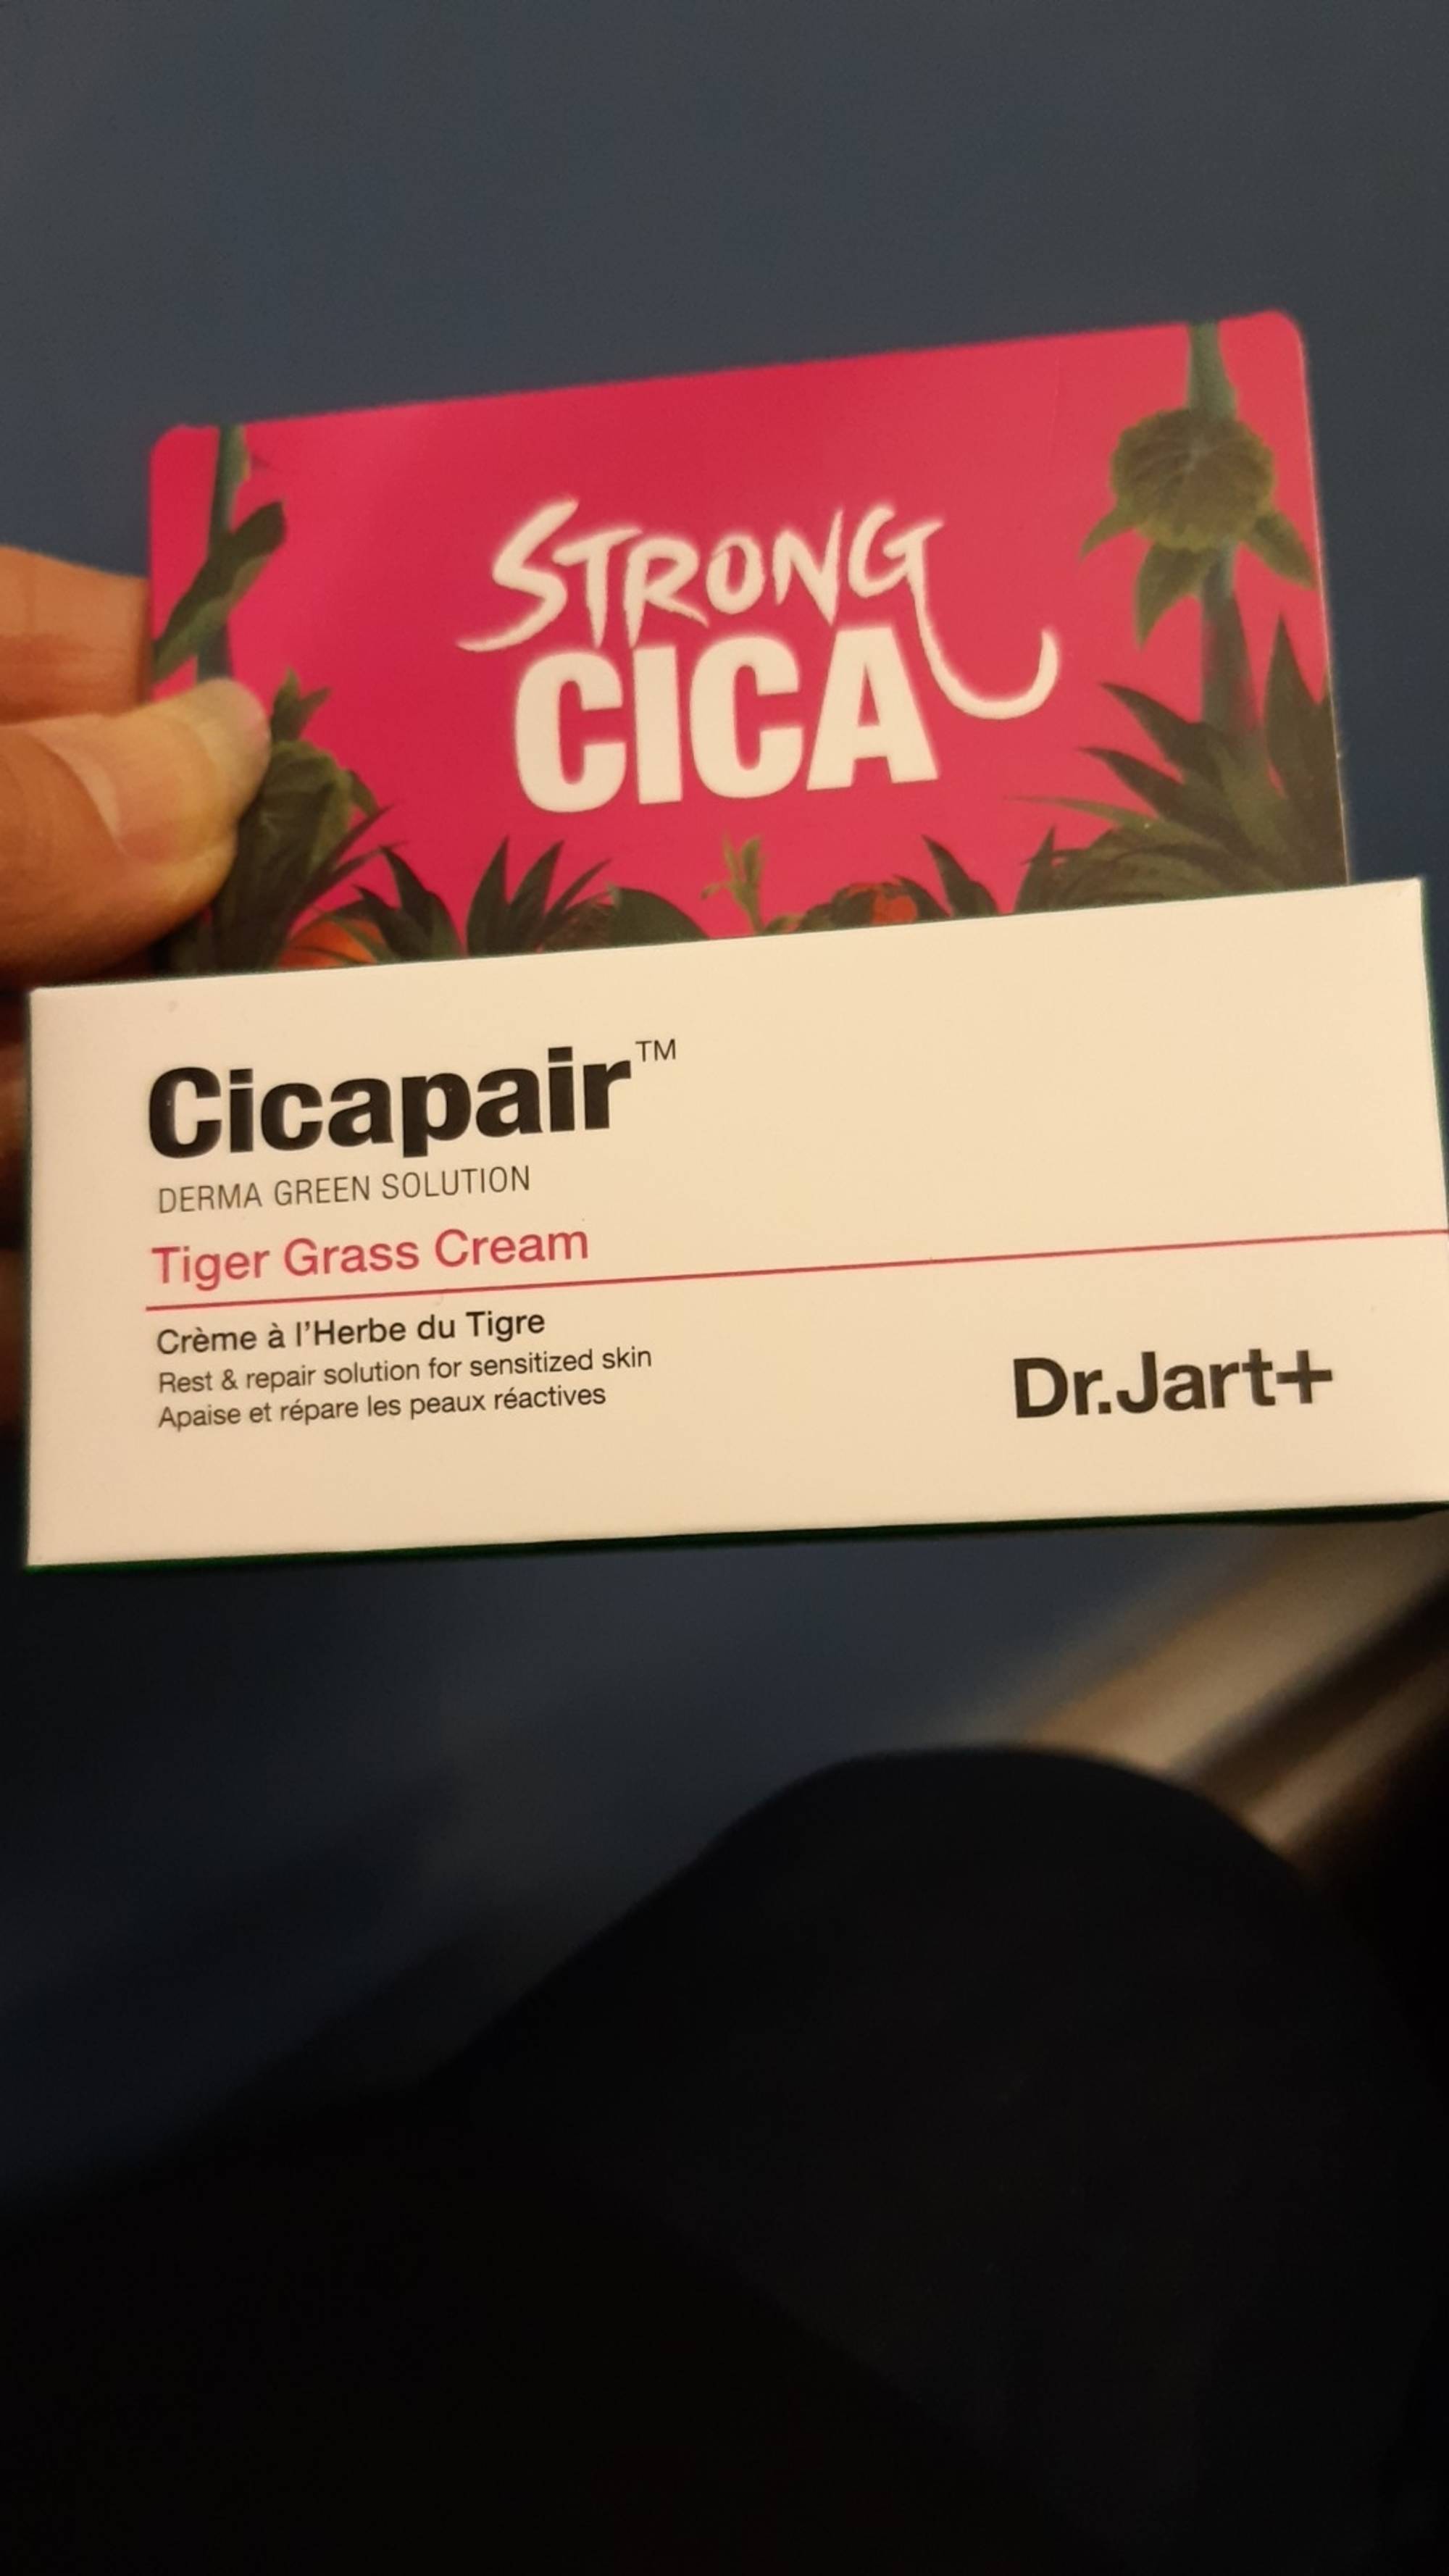 DR.JART+ - Cicapair - Crème d'herbe du tigre